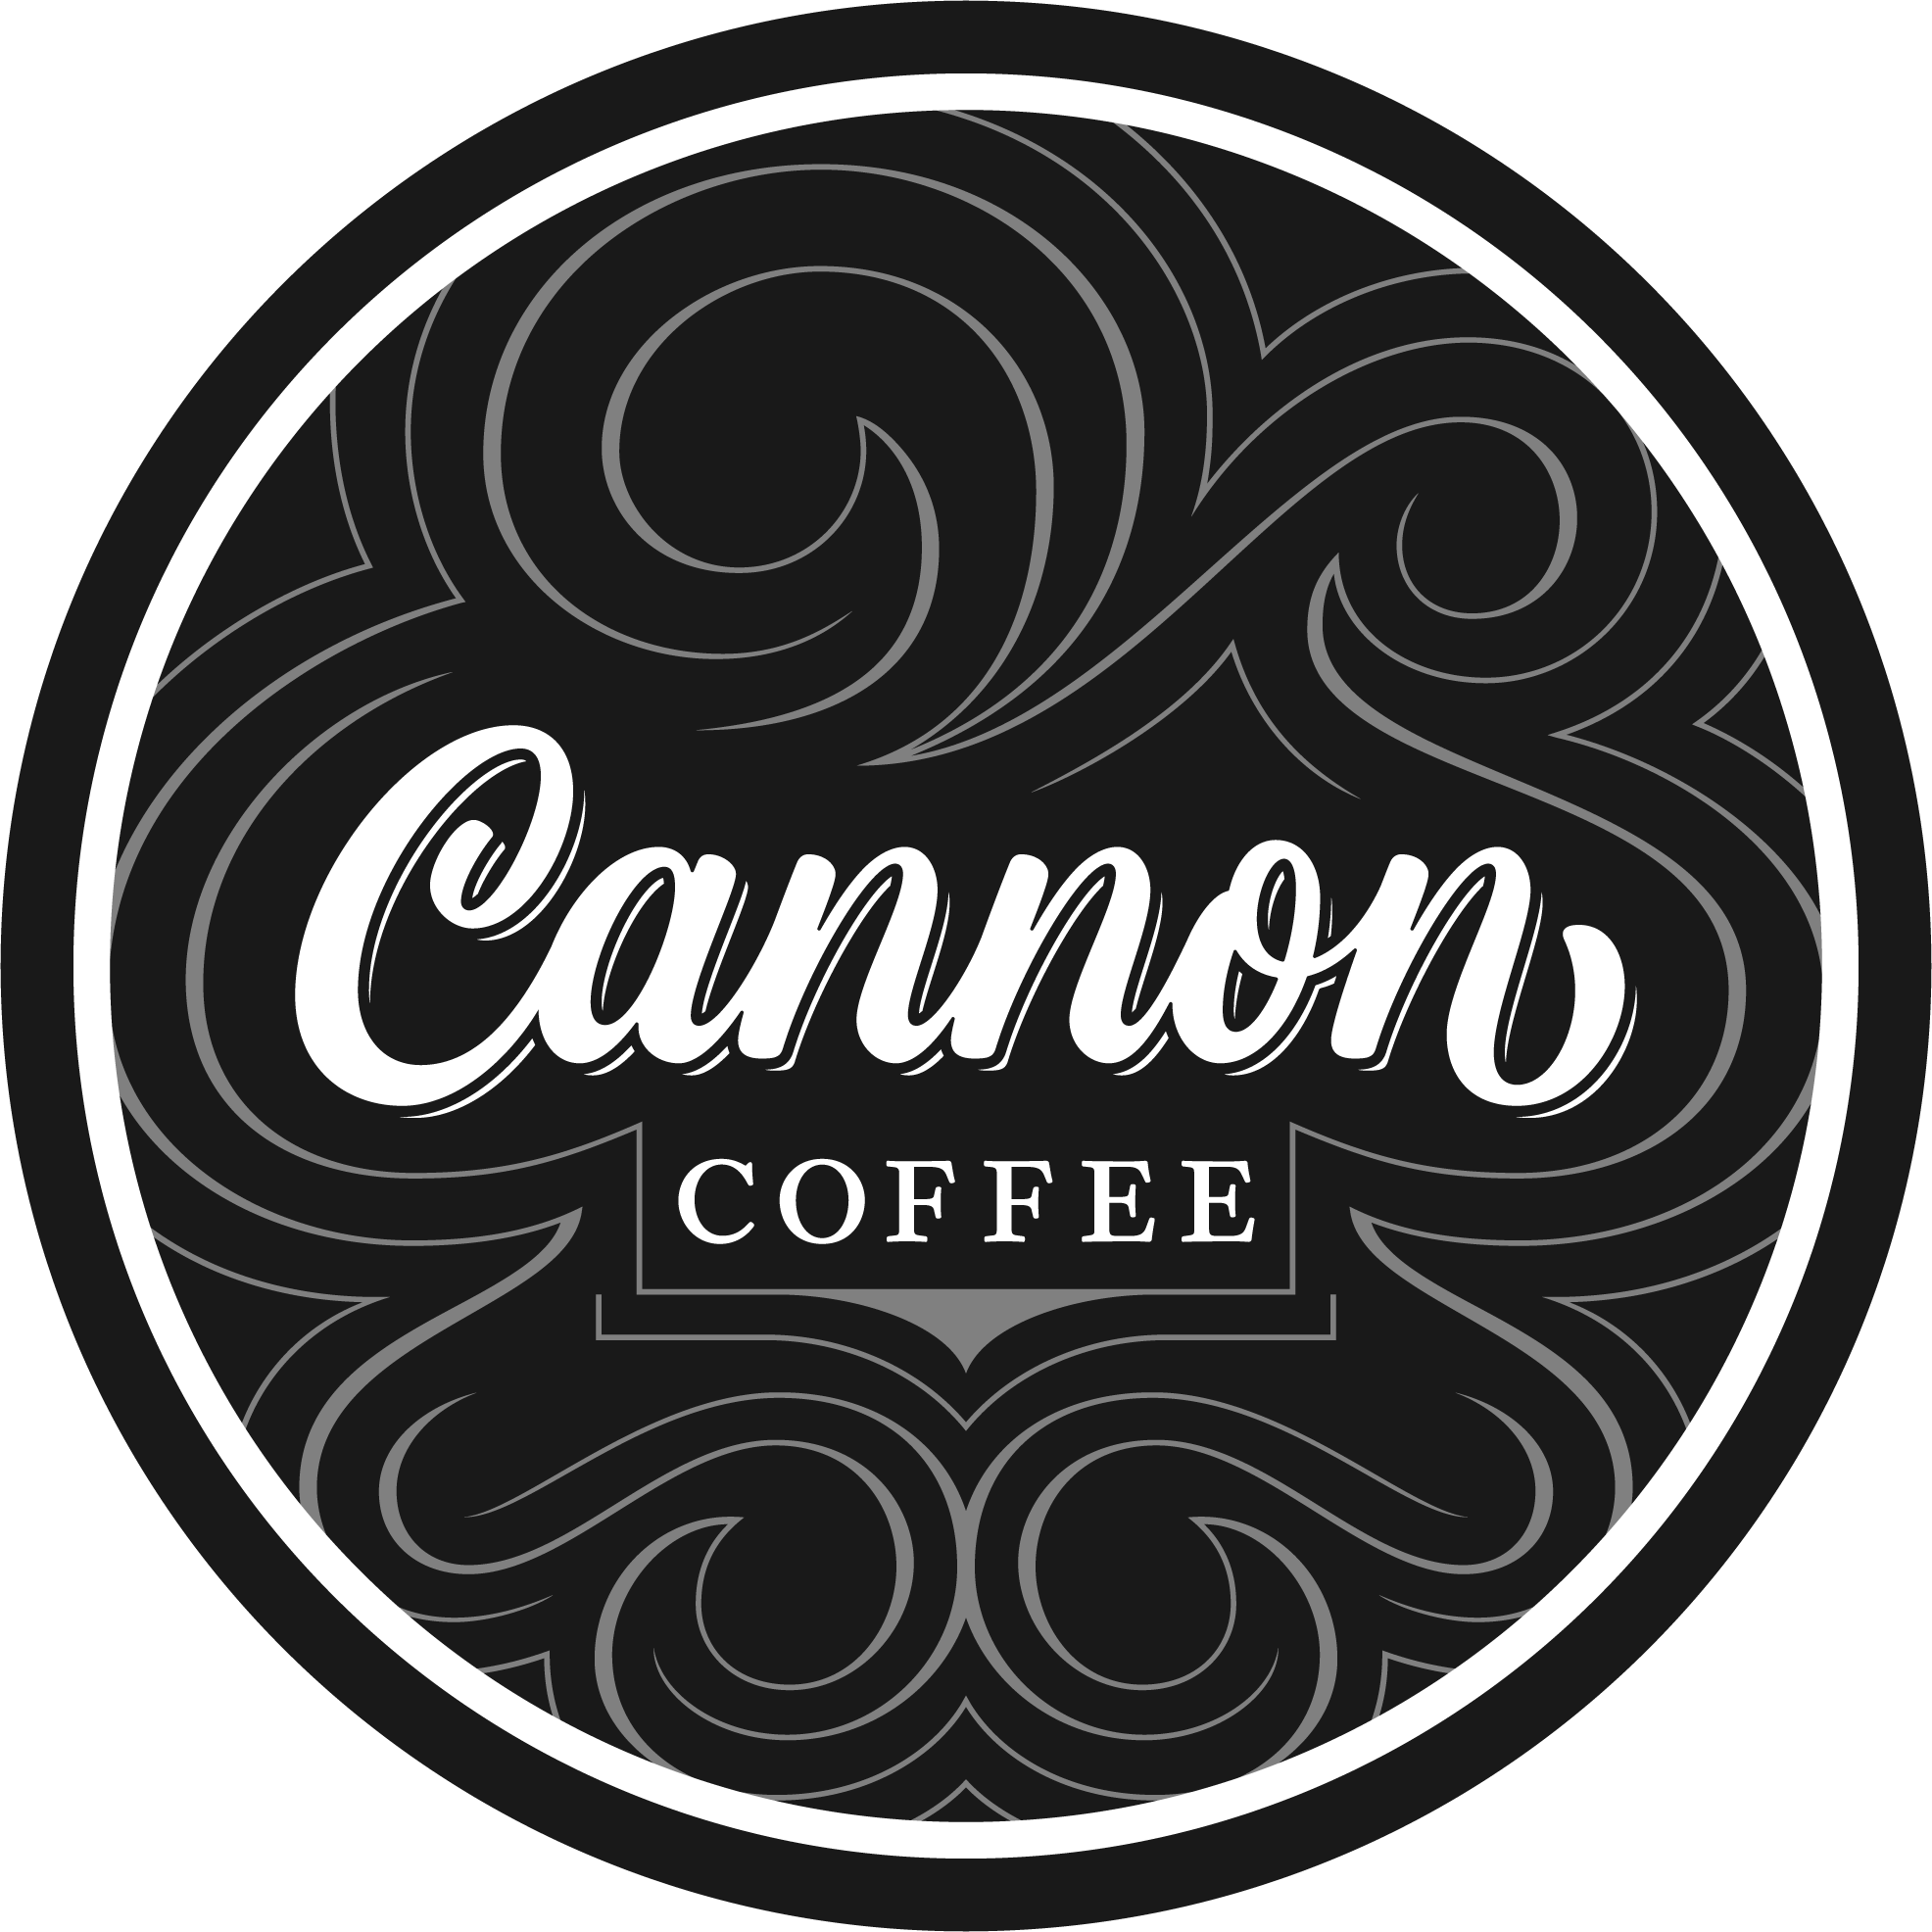 Cannon Coffee - Washington County